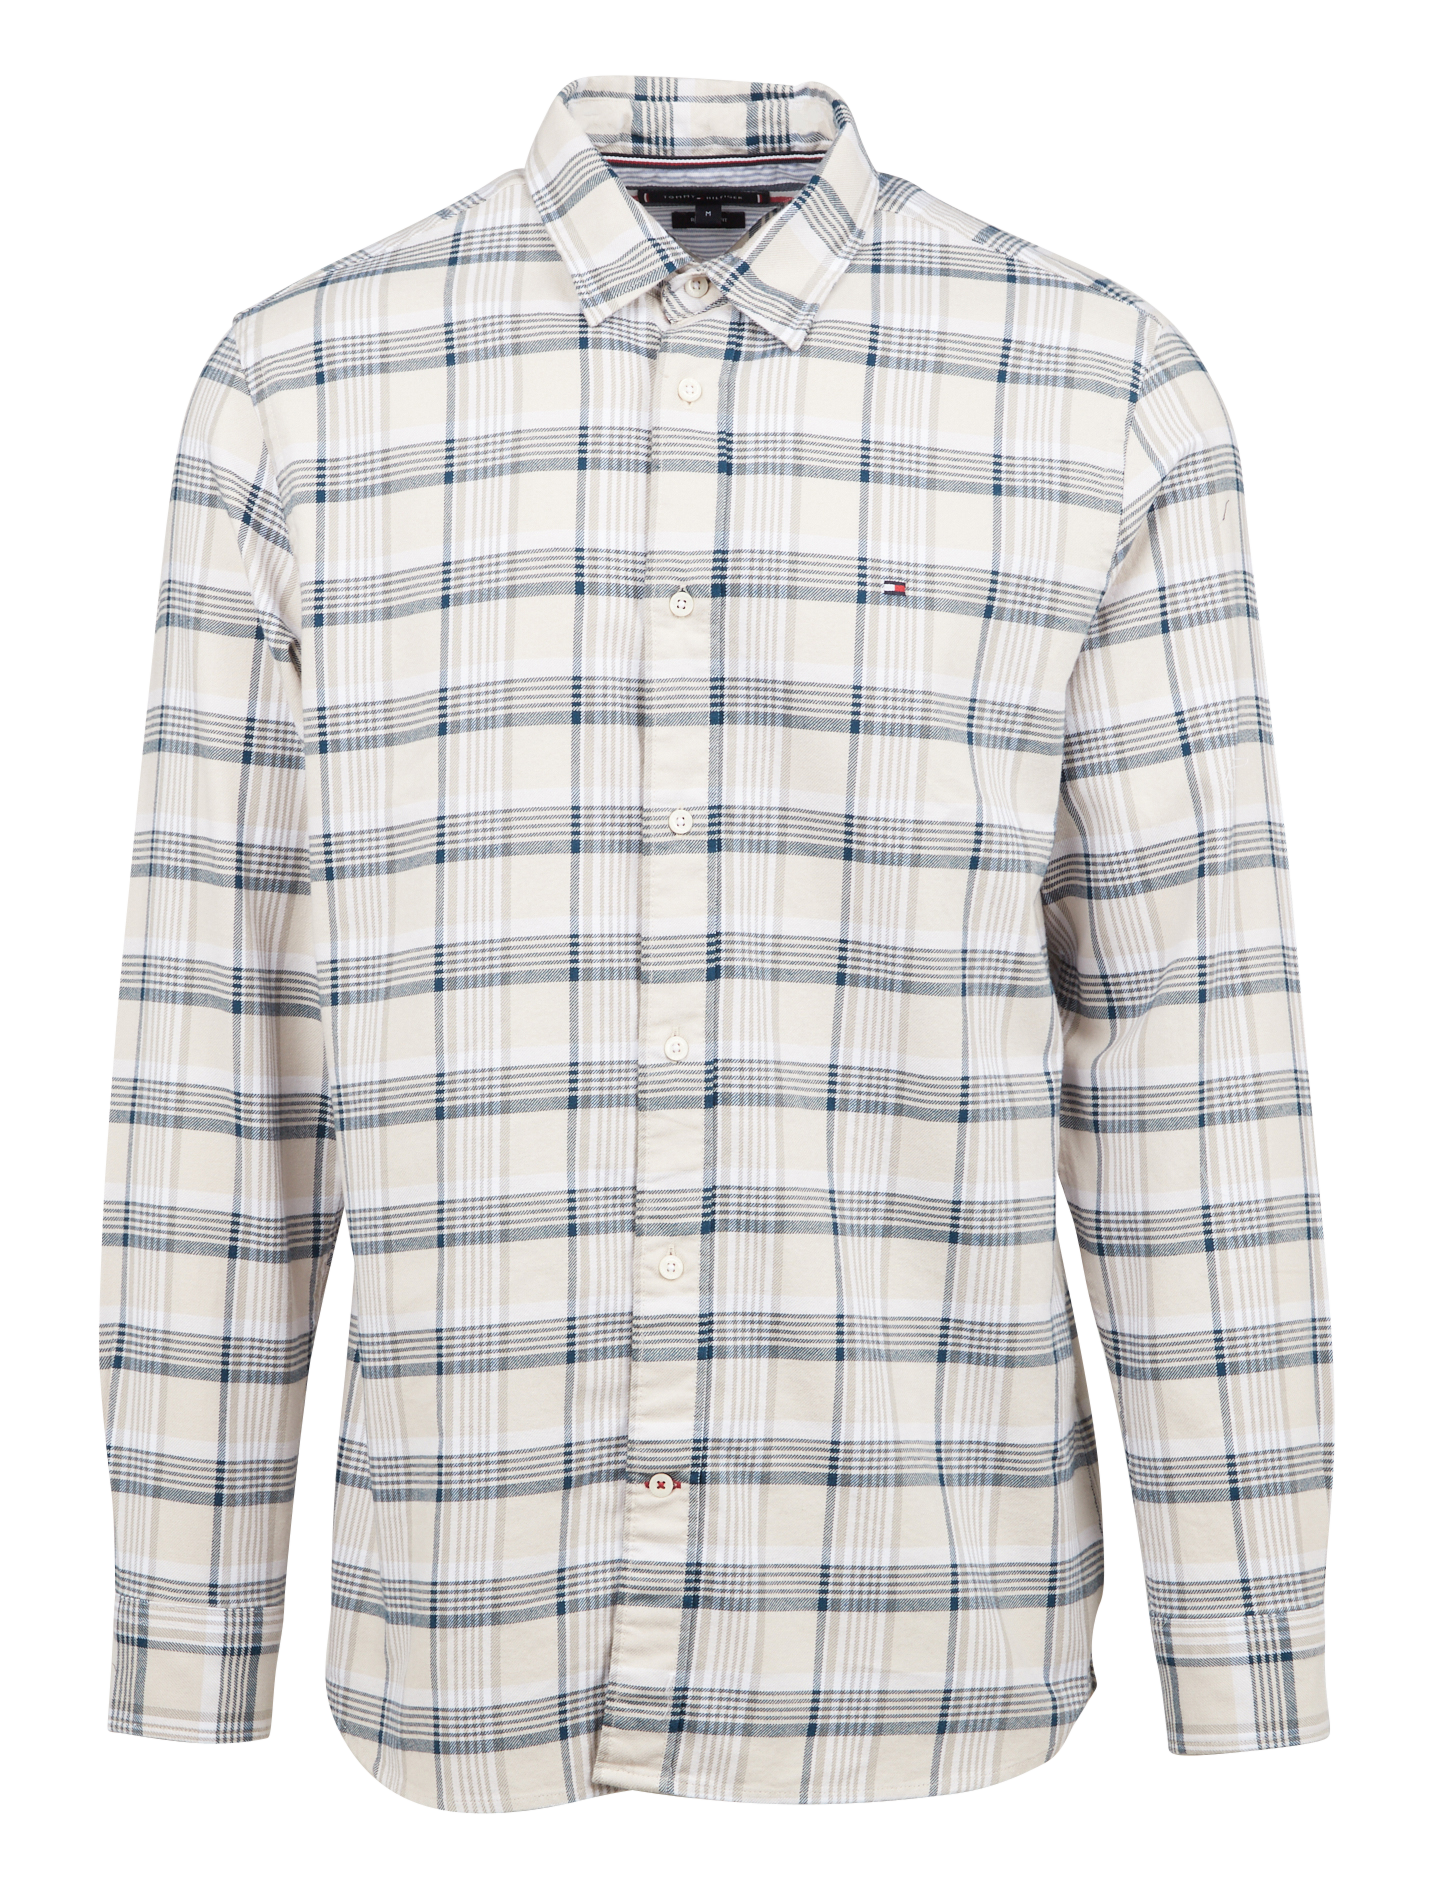 Tommy Hilfiger Mens Regular Fit Multi Window Pane Check Dress Shirt